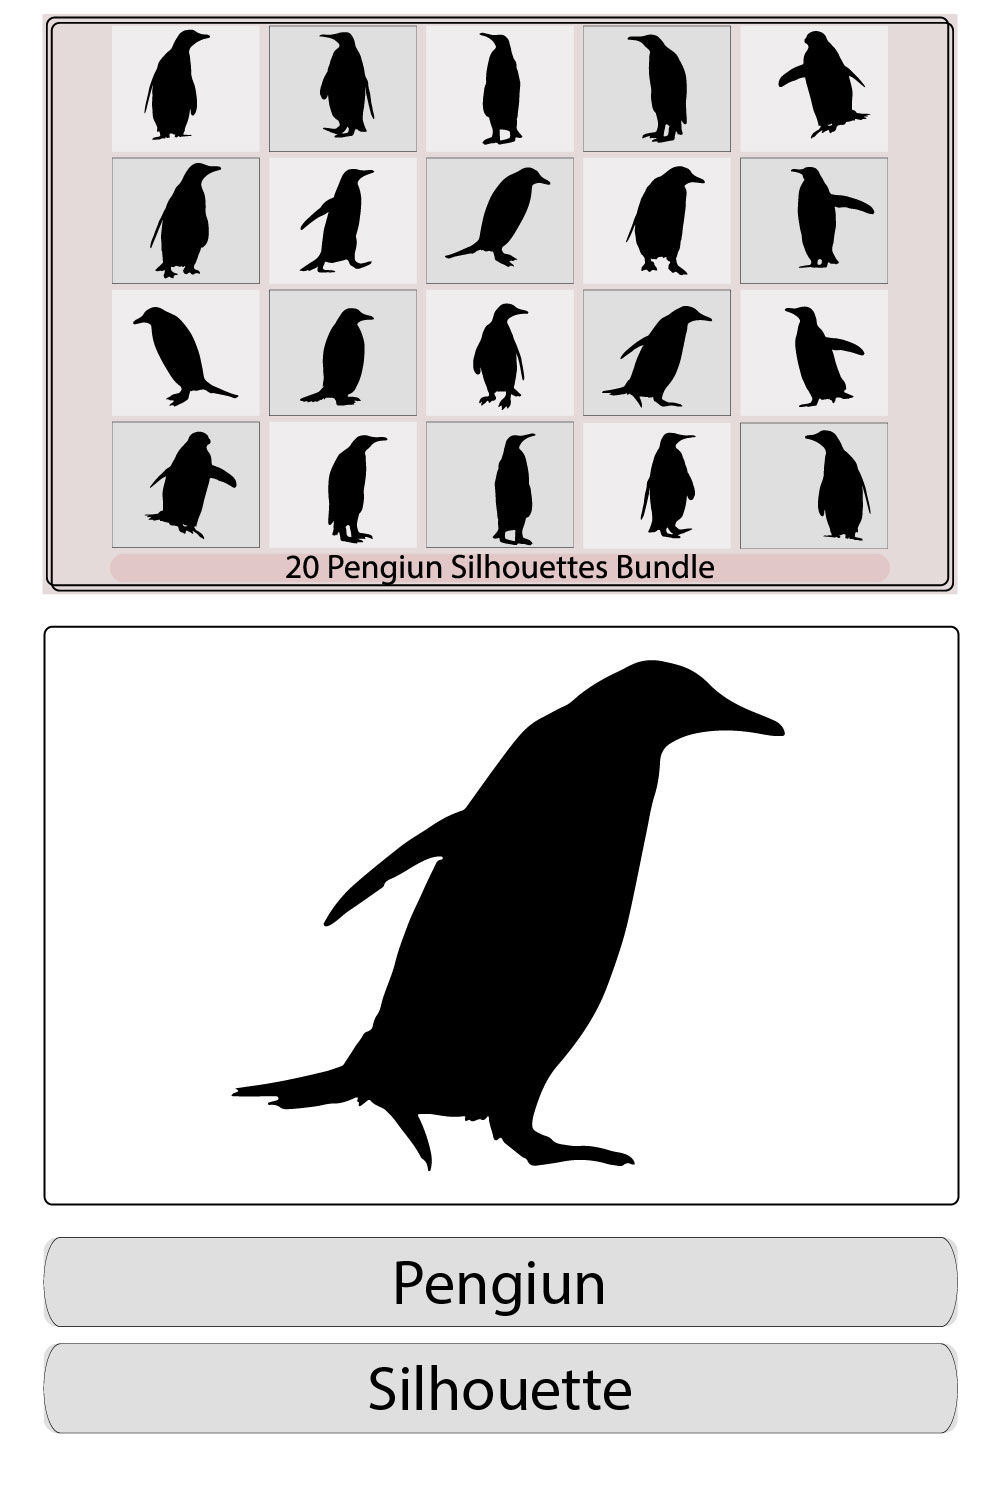 cute penguin silhouette vector design illustration,Vector illustration of a black silhouette of a penguin,Penguins Silhouette Set,collection of penguins' silhouettes pinterest preview image.